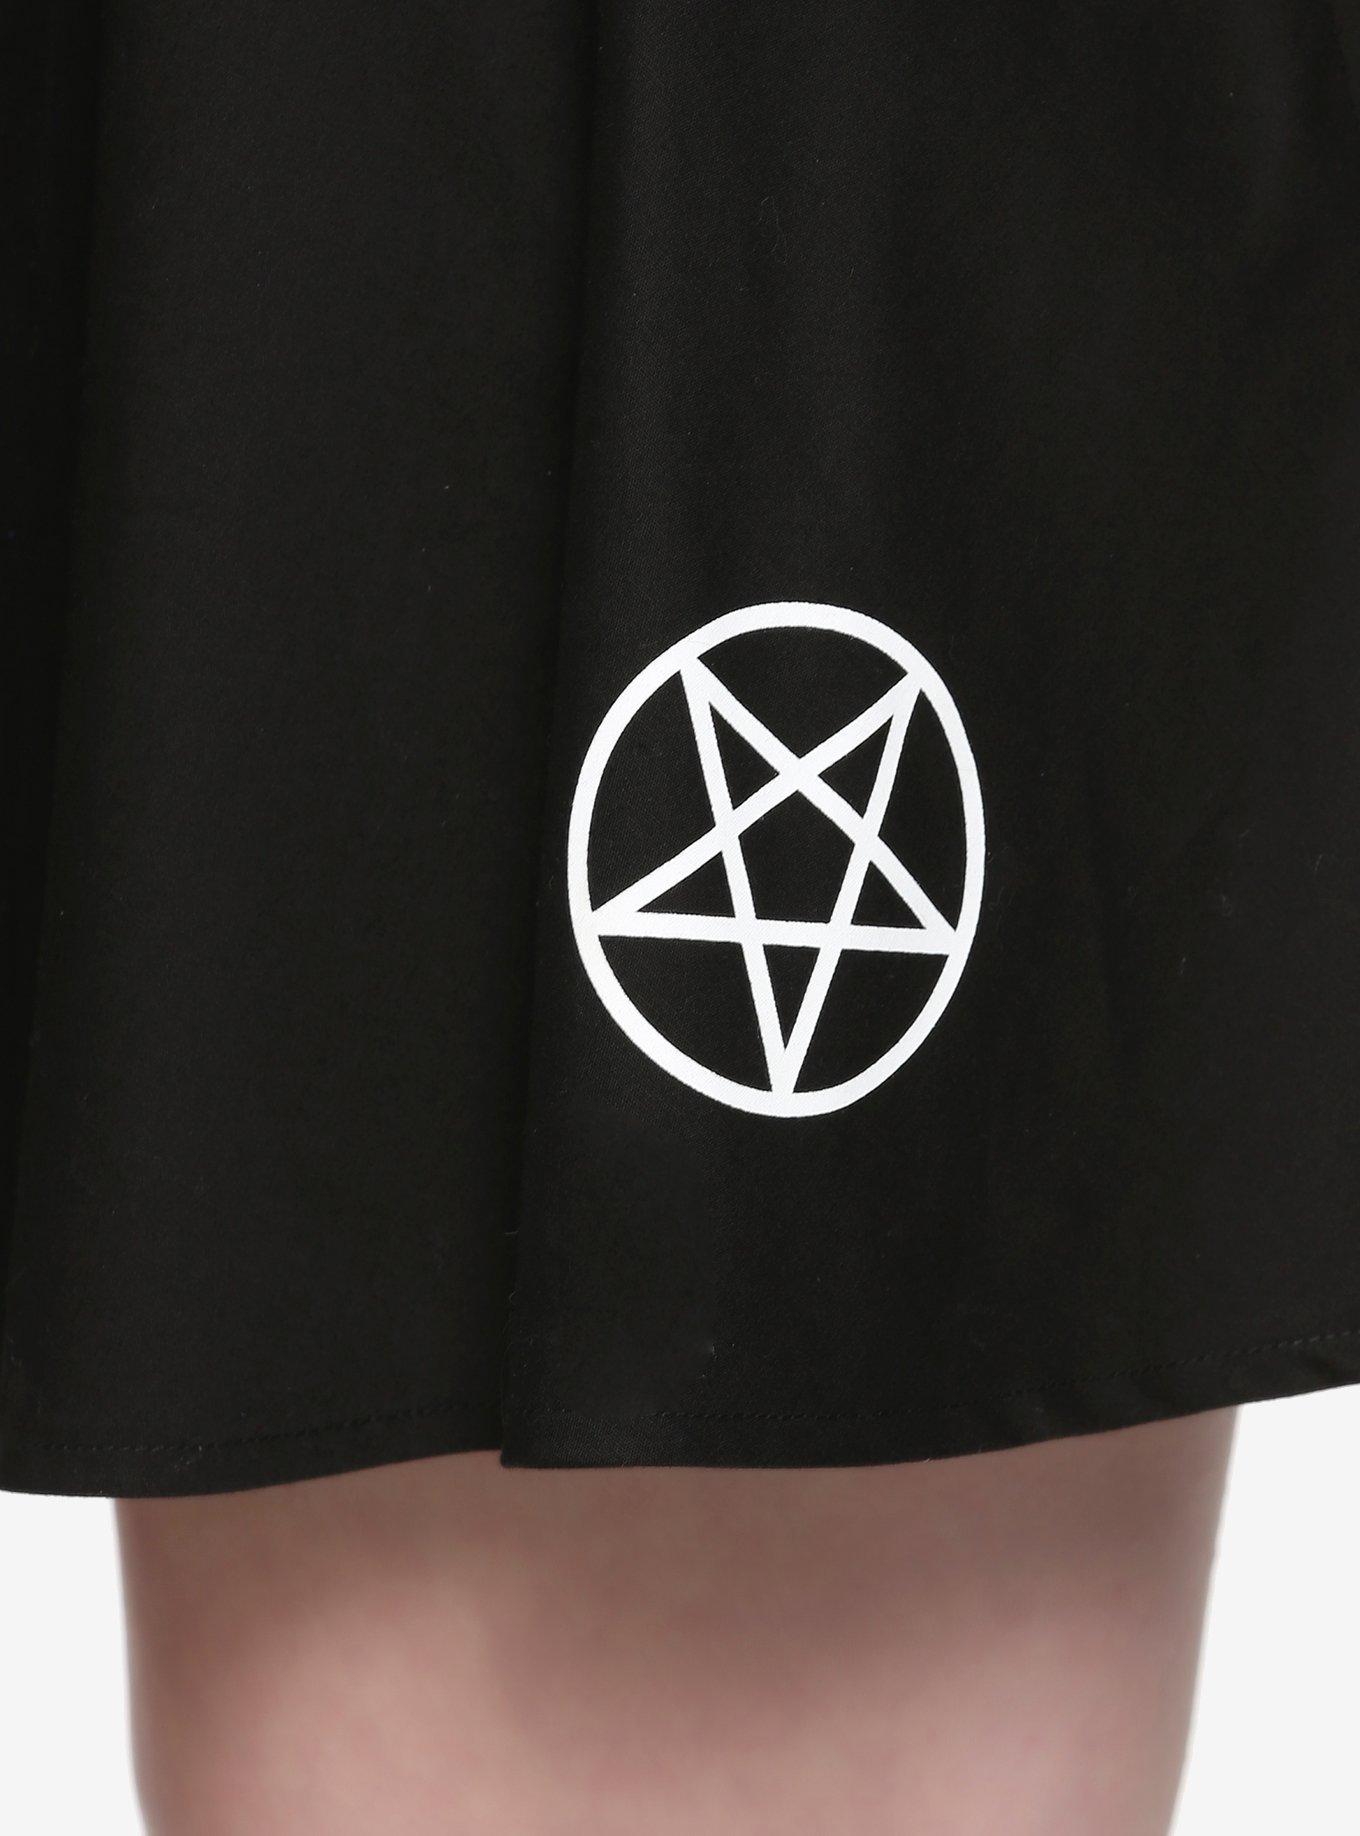 The Craft Pentagram Suspender Skirt Plus Size